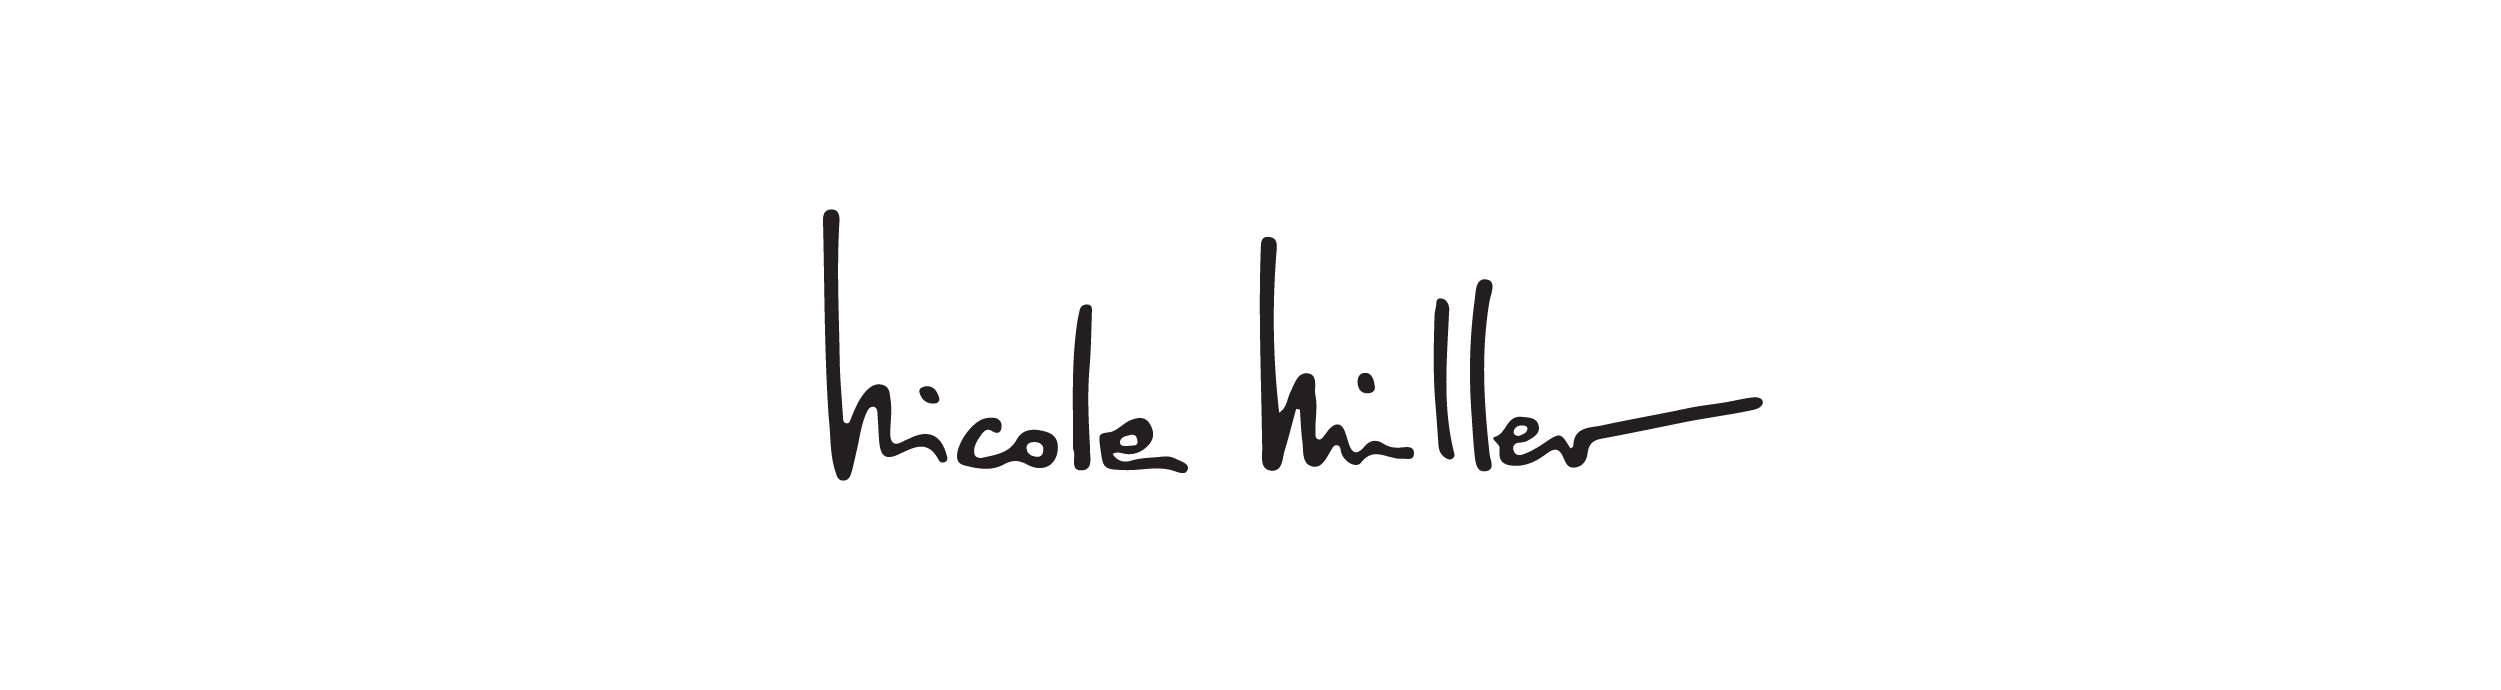 Nicole Miller logo